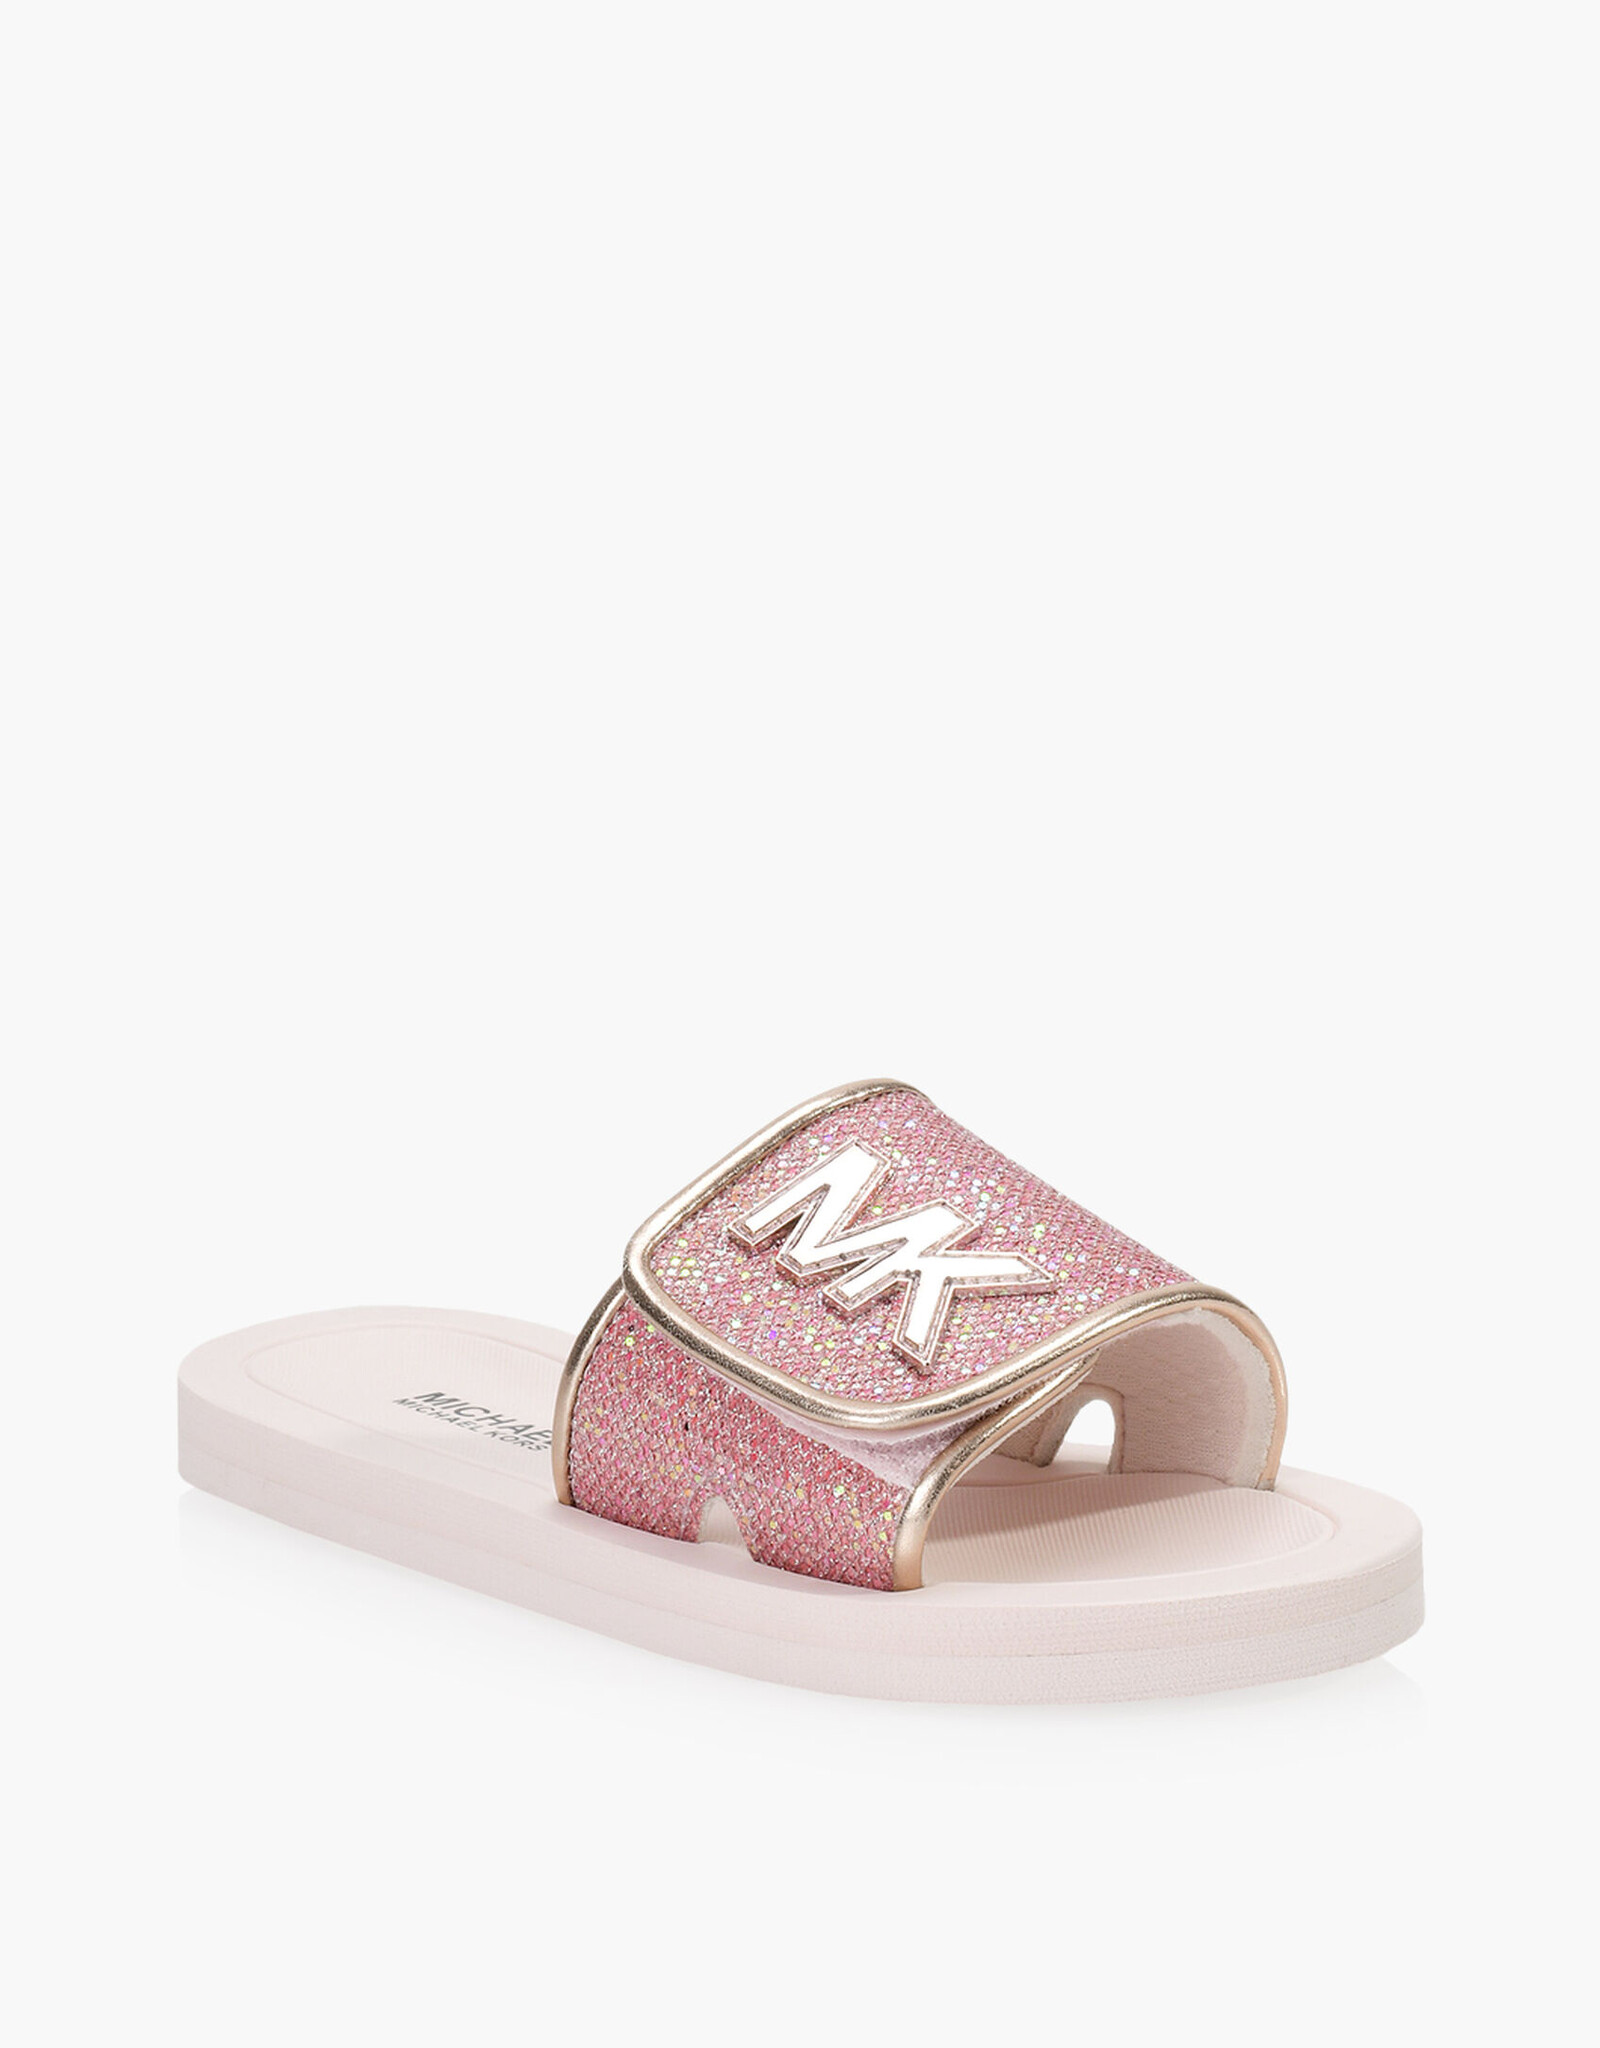 Michael Kors SP23 G Sandal Pink